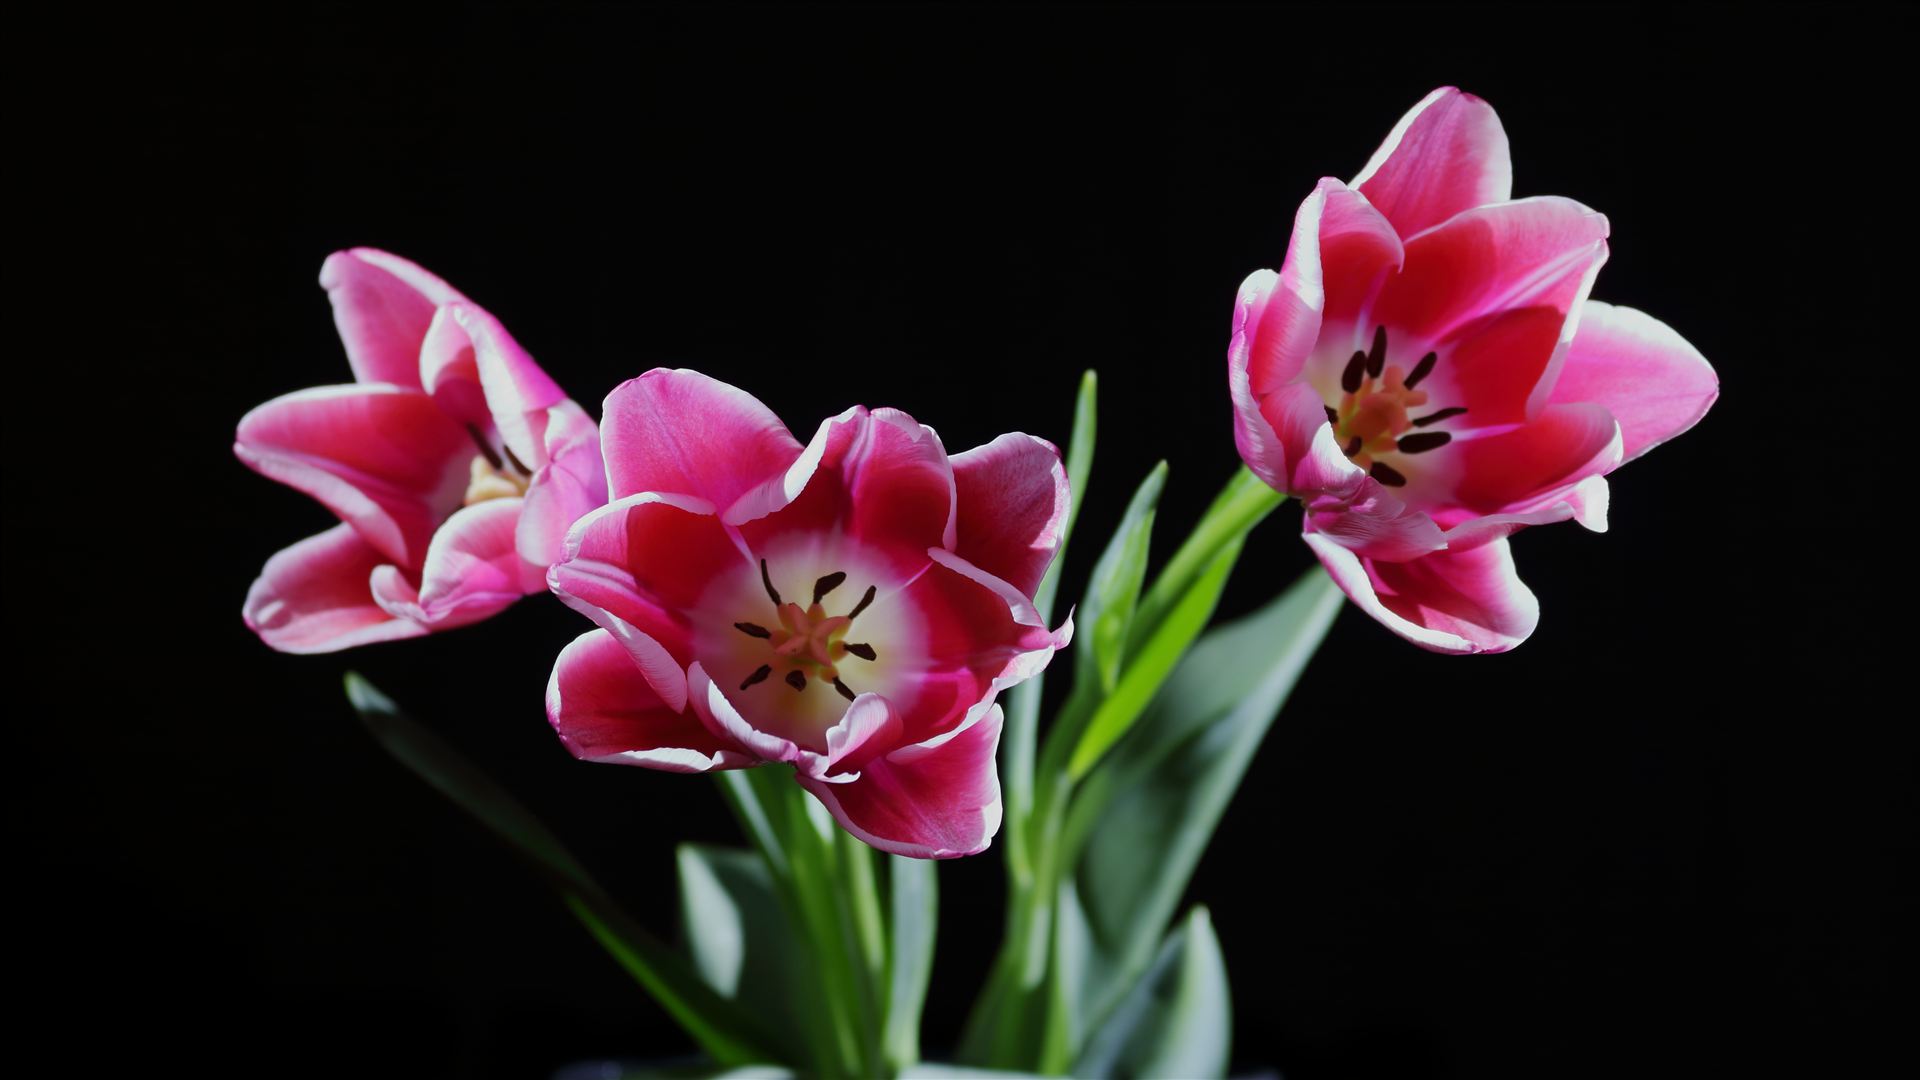 tulip1.JPG three tulip flowers by Goomba707